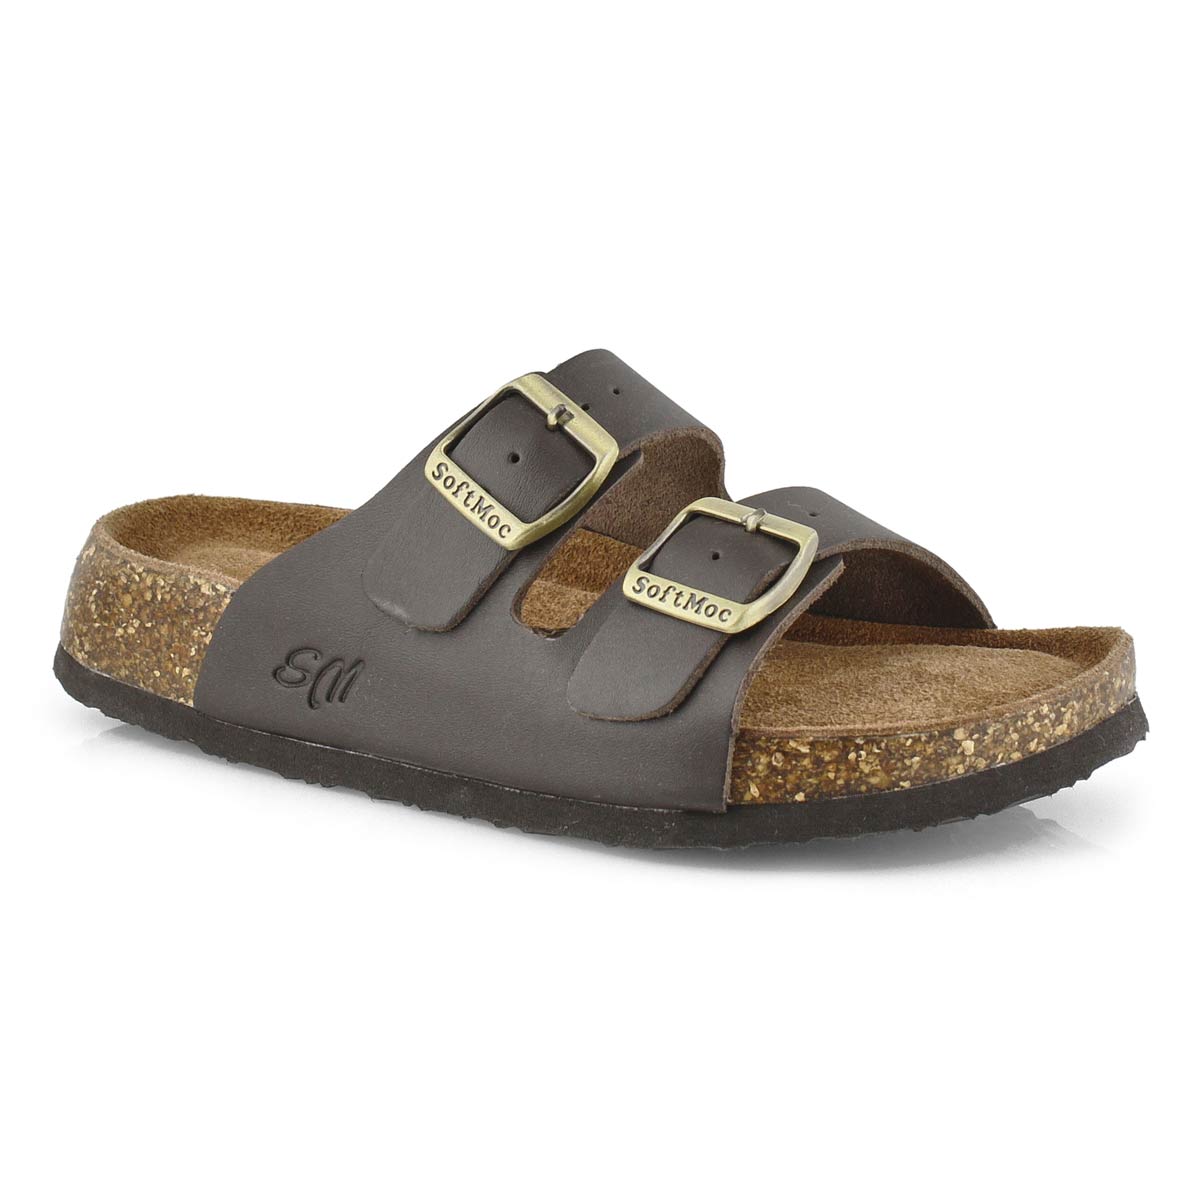 softmoc sandals canada